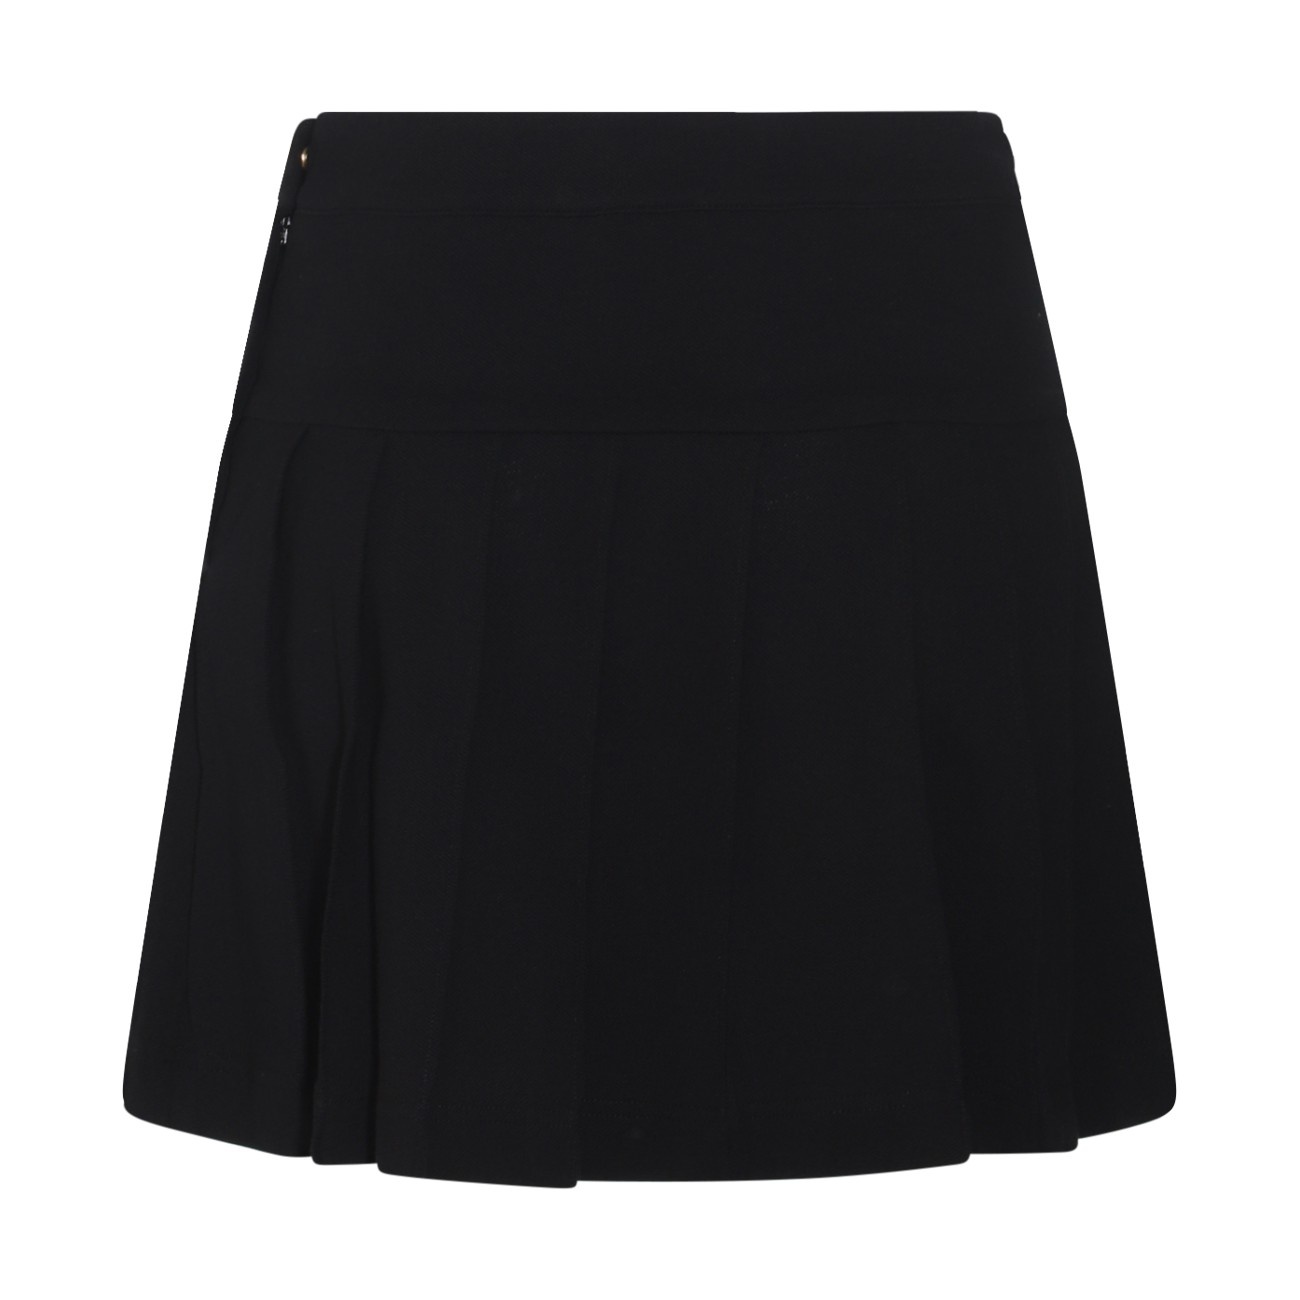 black cotton skirt - 2